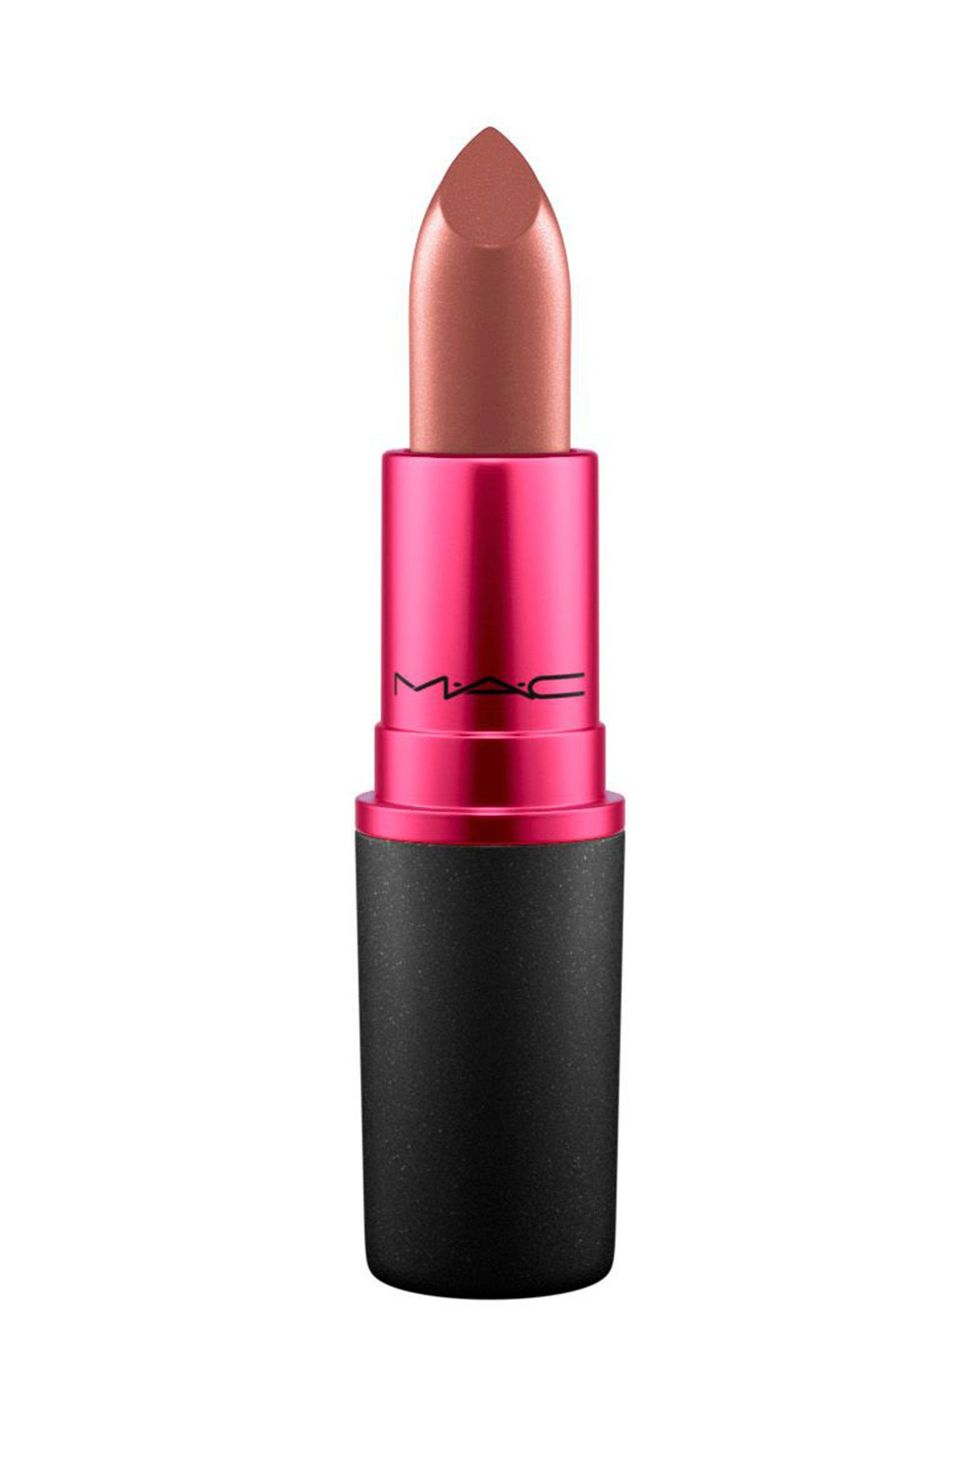 Mac Cosmetics Viva Glam Lipstick